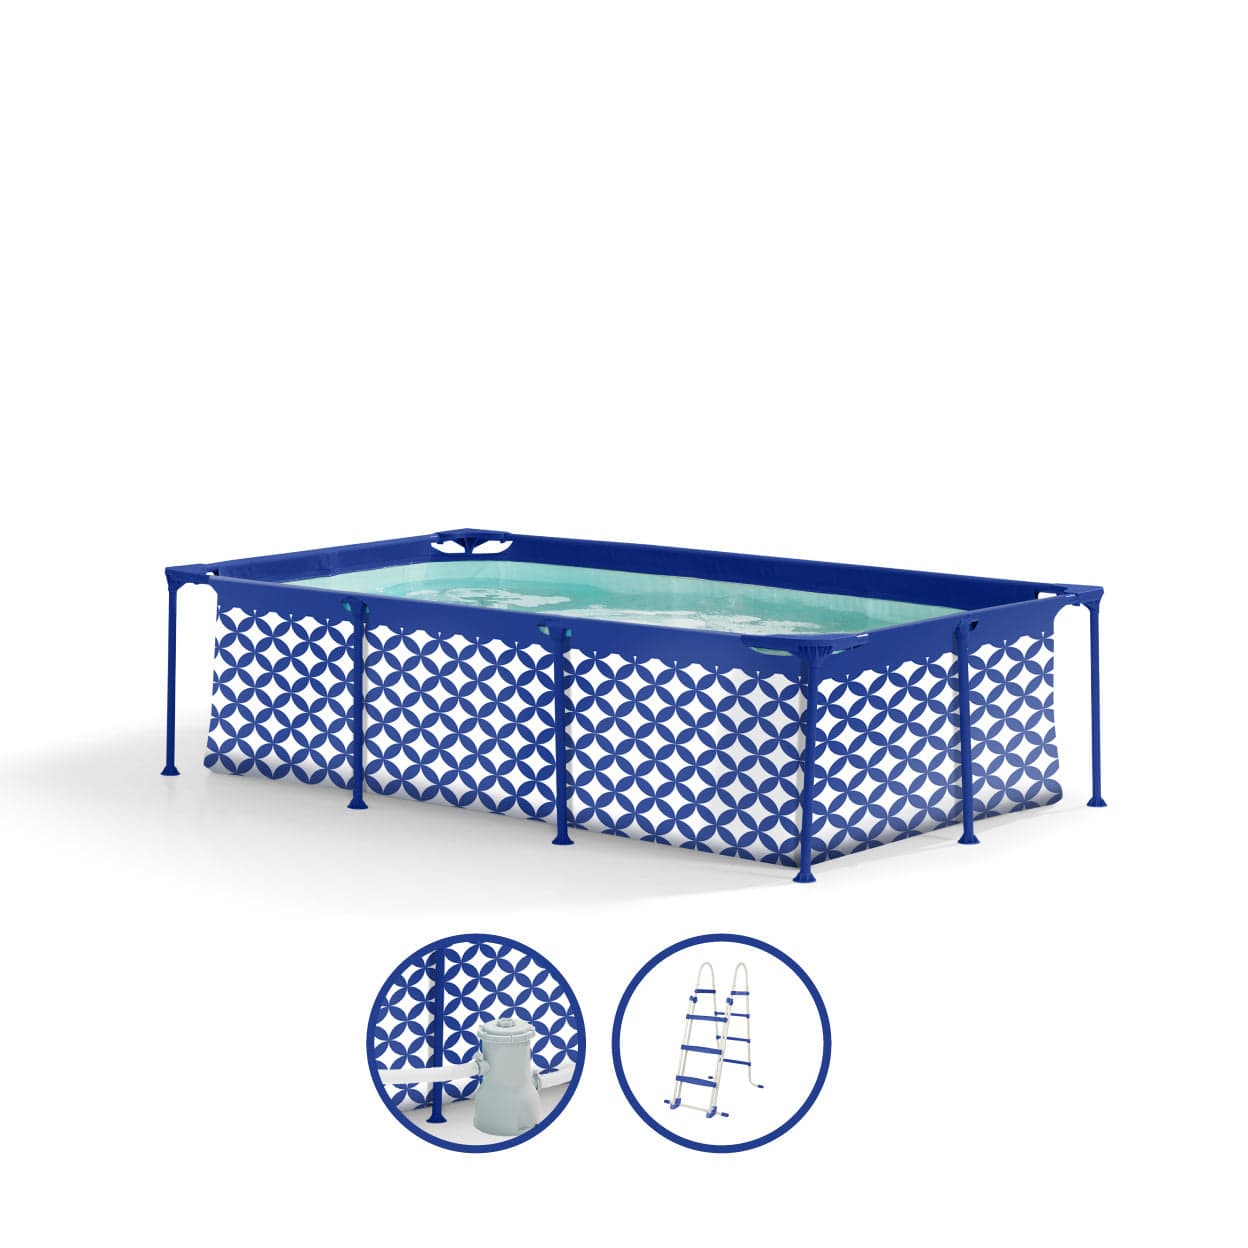 opzetzwembad-260x160x65-cm-blauw-met-accessoires-swim-essentials-3